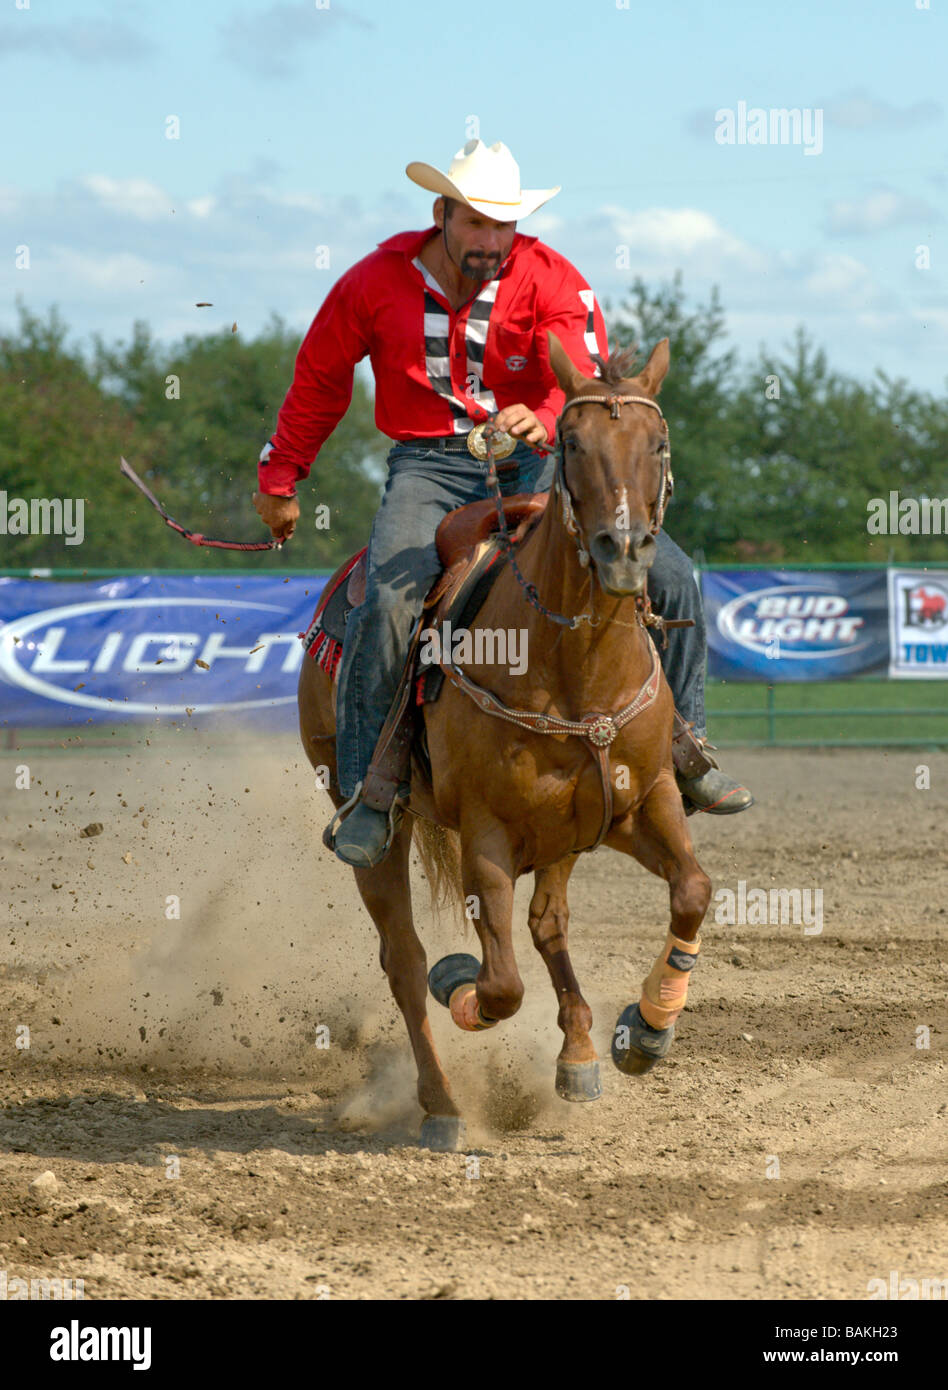 Man riding horse at rodeo Stock Photo